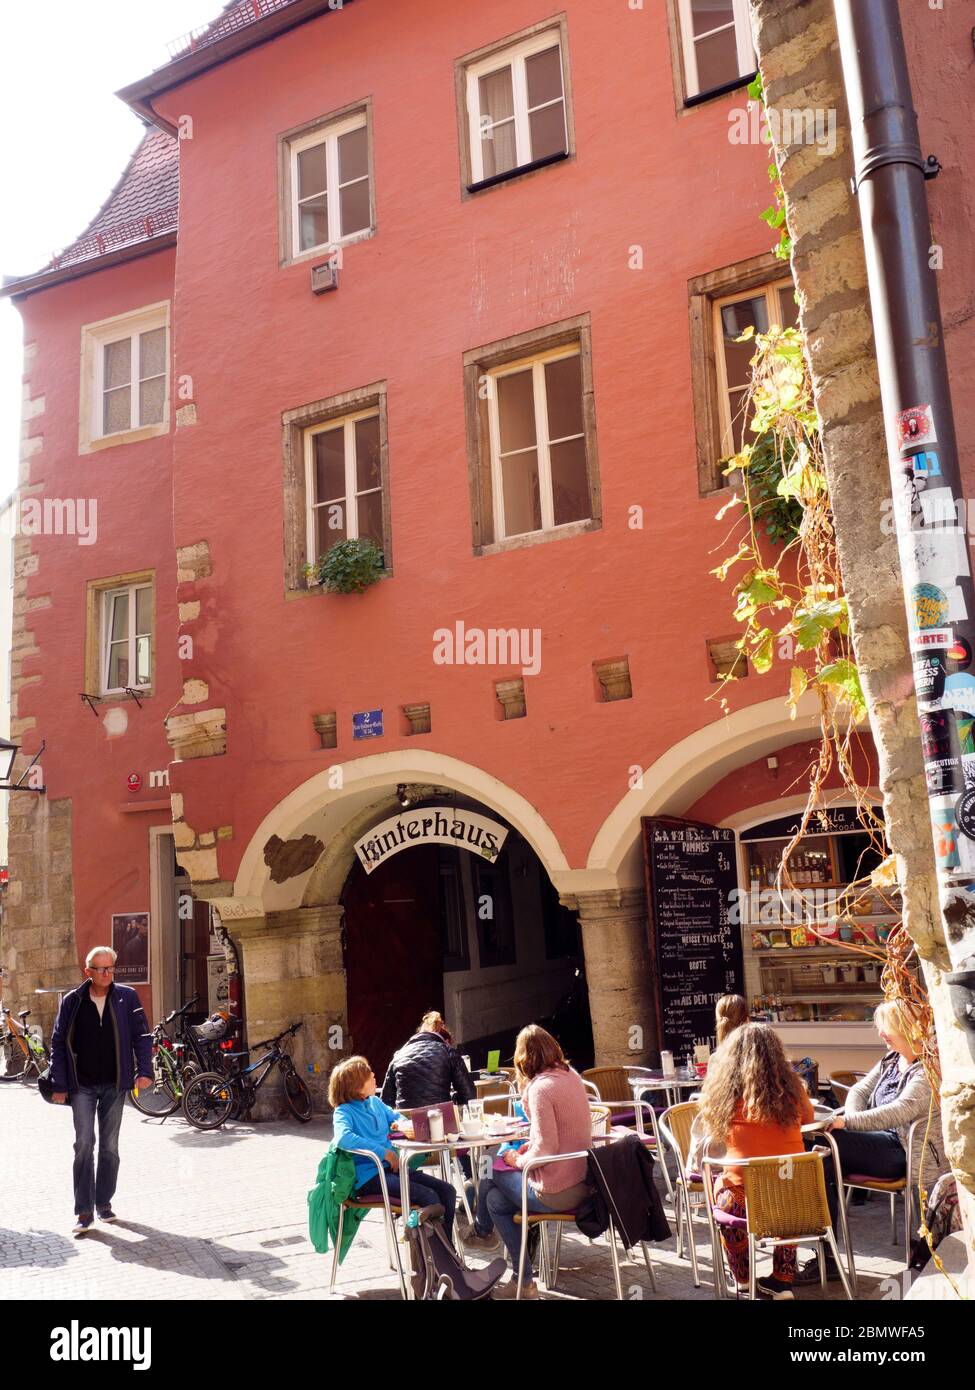 Ratisbonne, Altstadt, UNESCO Welterbe, Bayern, Allemagne Banque D'Images